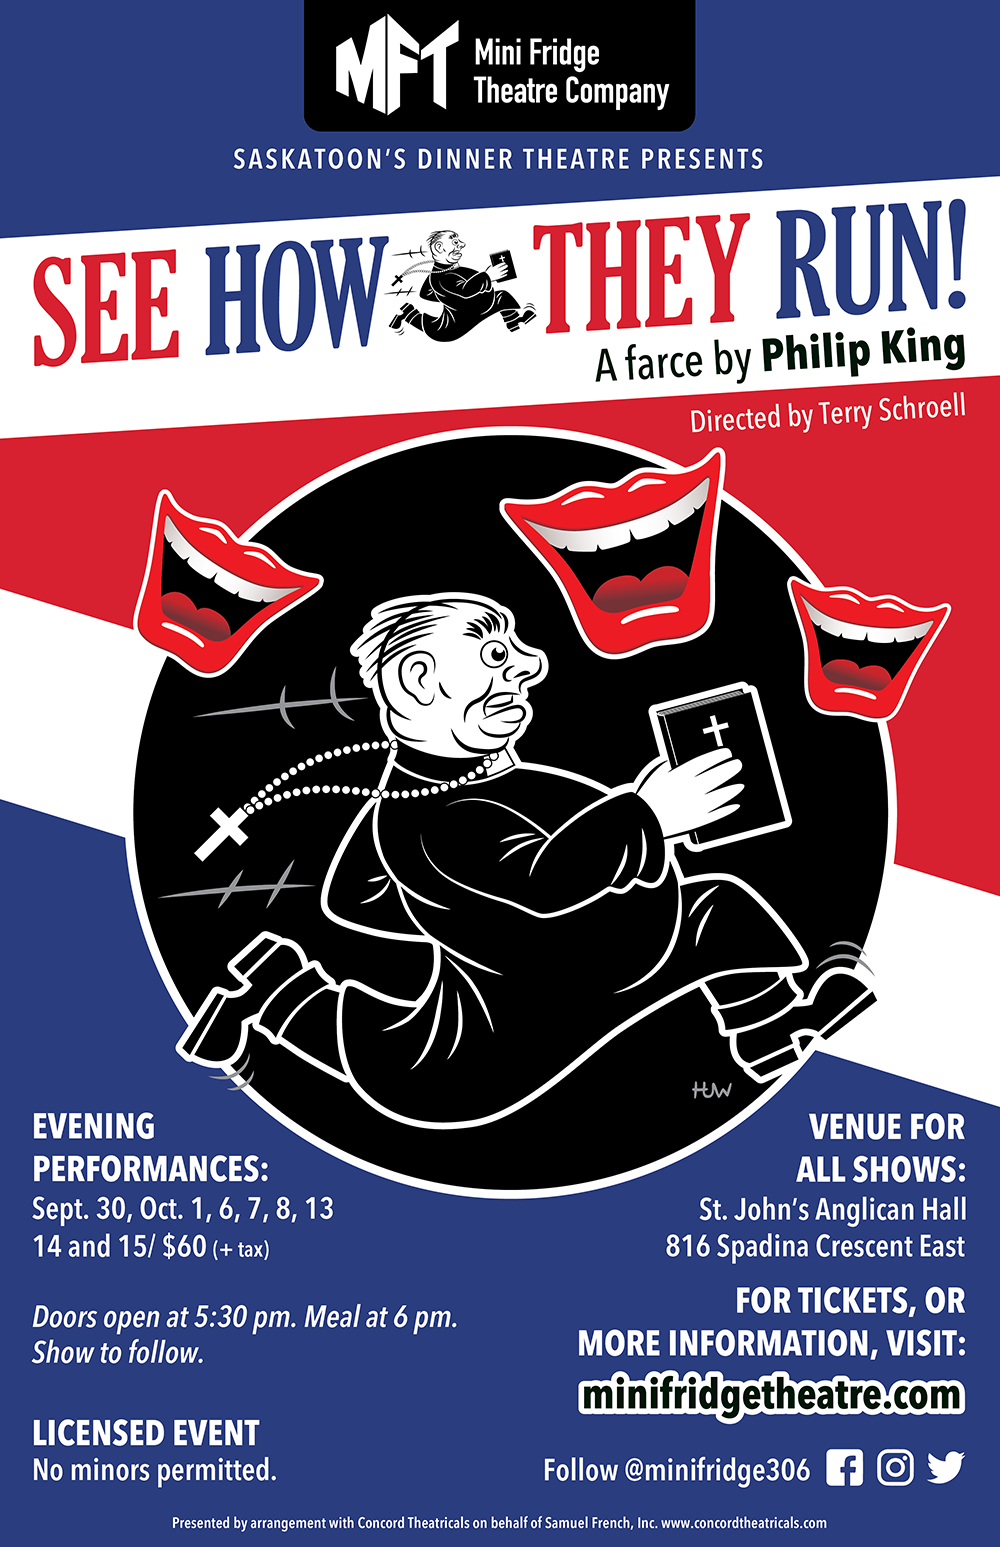 Poster for Mini Fridge Theatre Company's 2022 live dinner theatre production of Philip King's See How They Run in Saskatoon, Saskatchewan